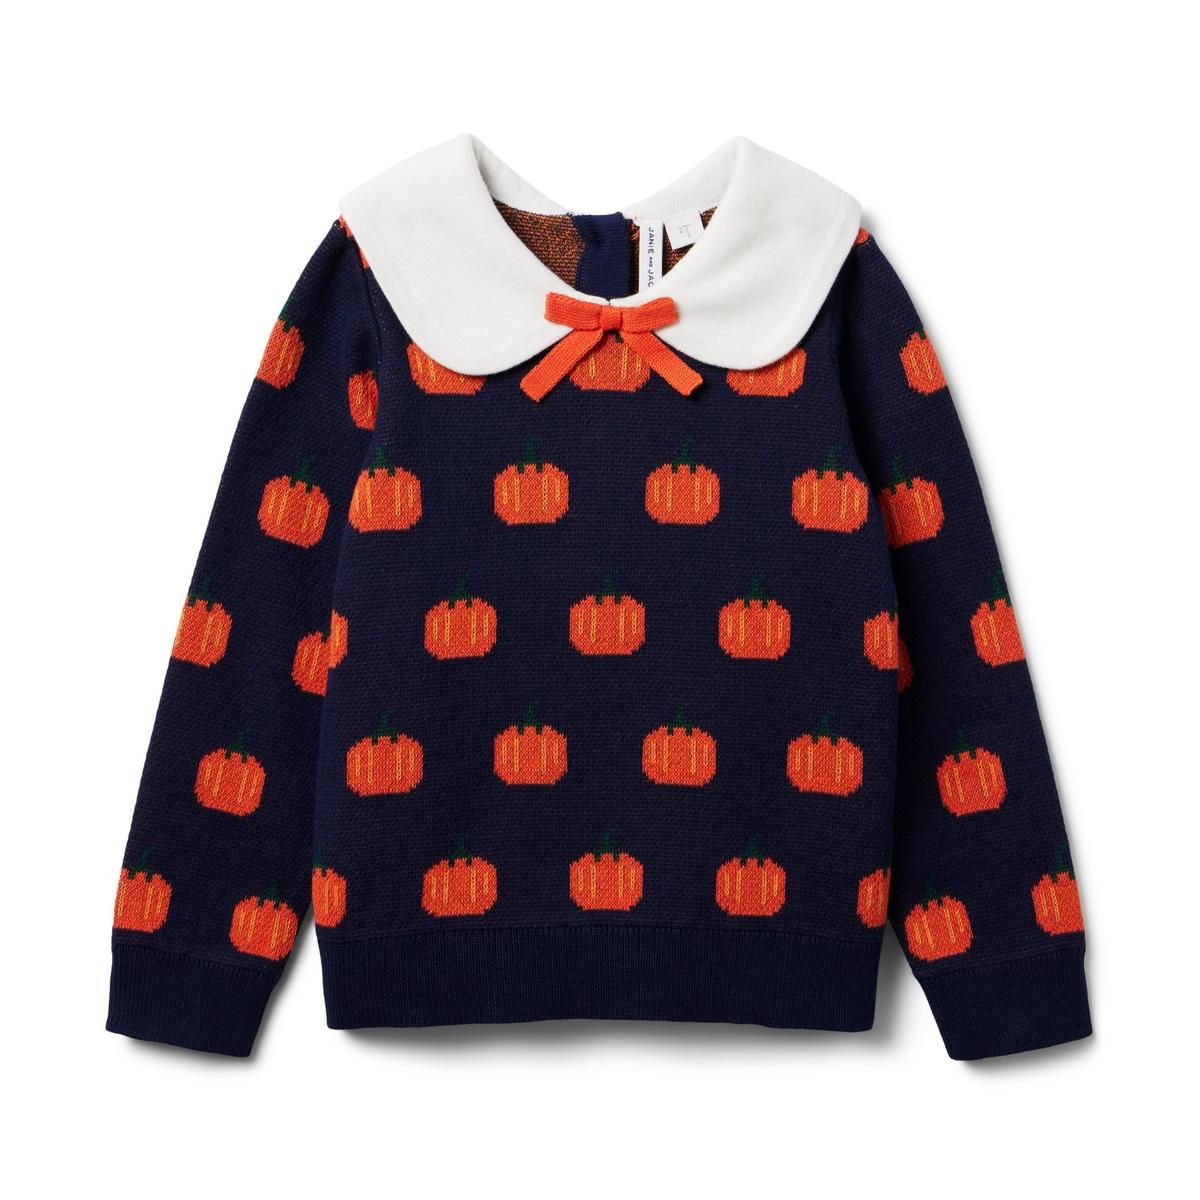 The Pumpkin Sweater | Janie and Jack